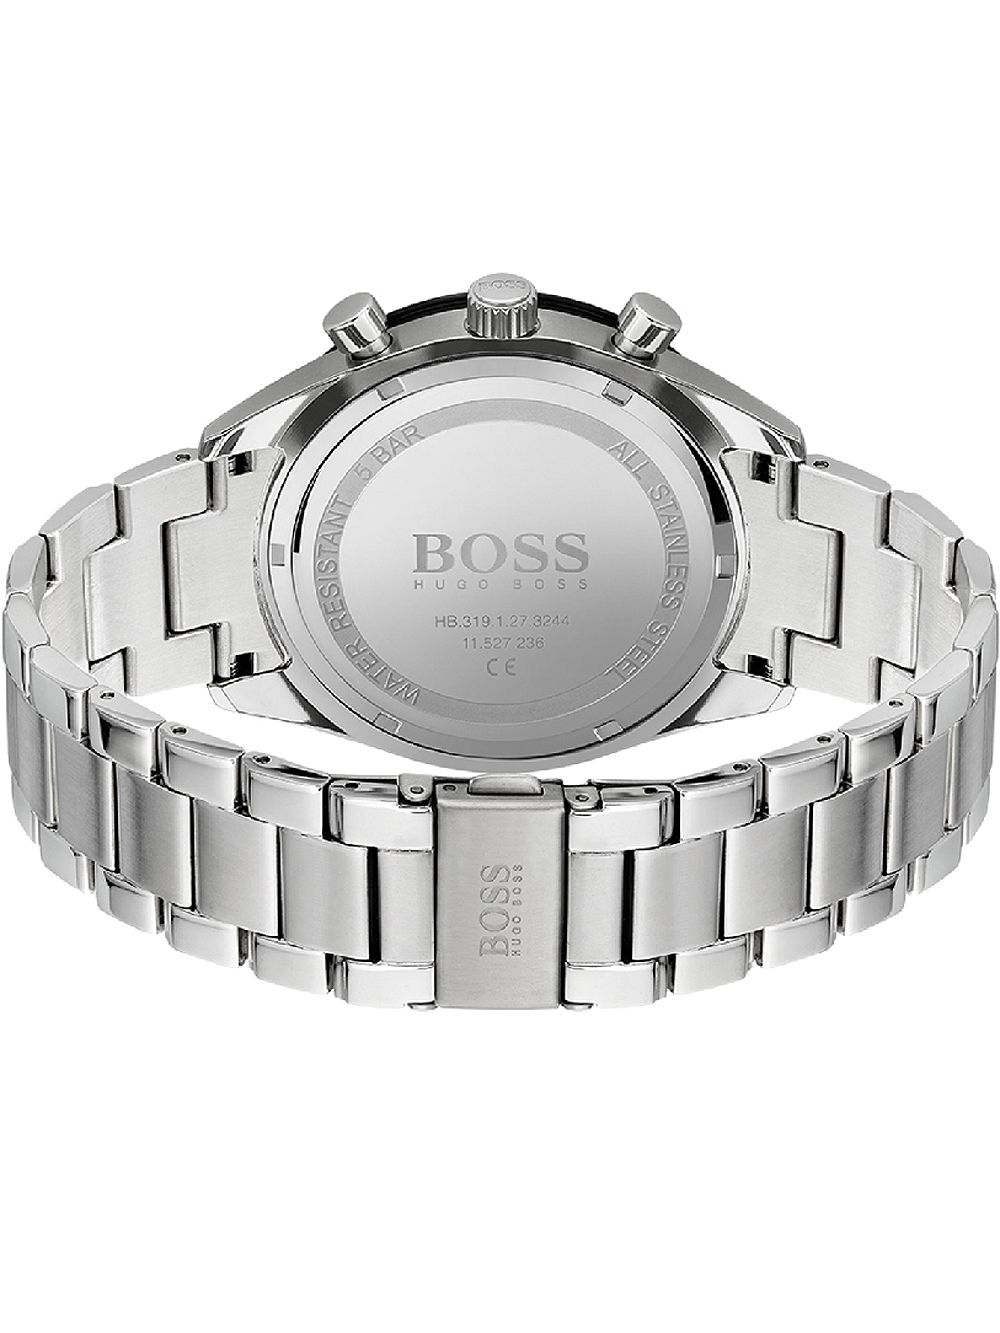 Hugo Boss Santiago Stainless Steel Men's Watch 1513862 - Big Daddy Watches #3